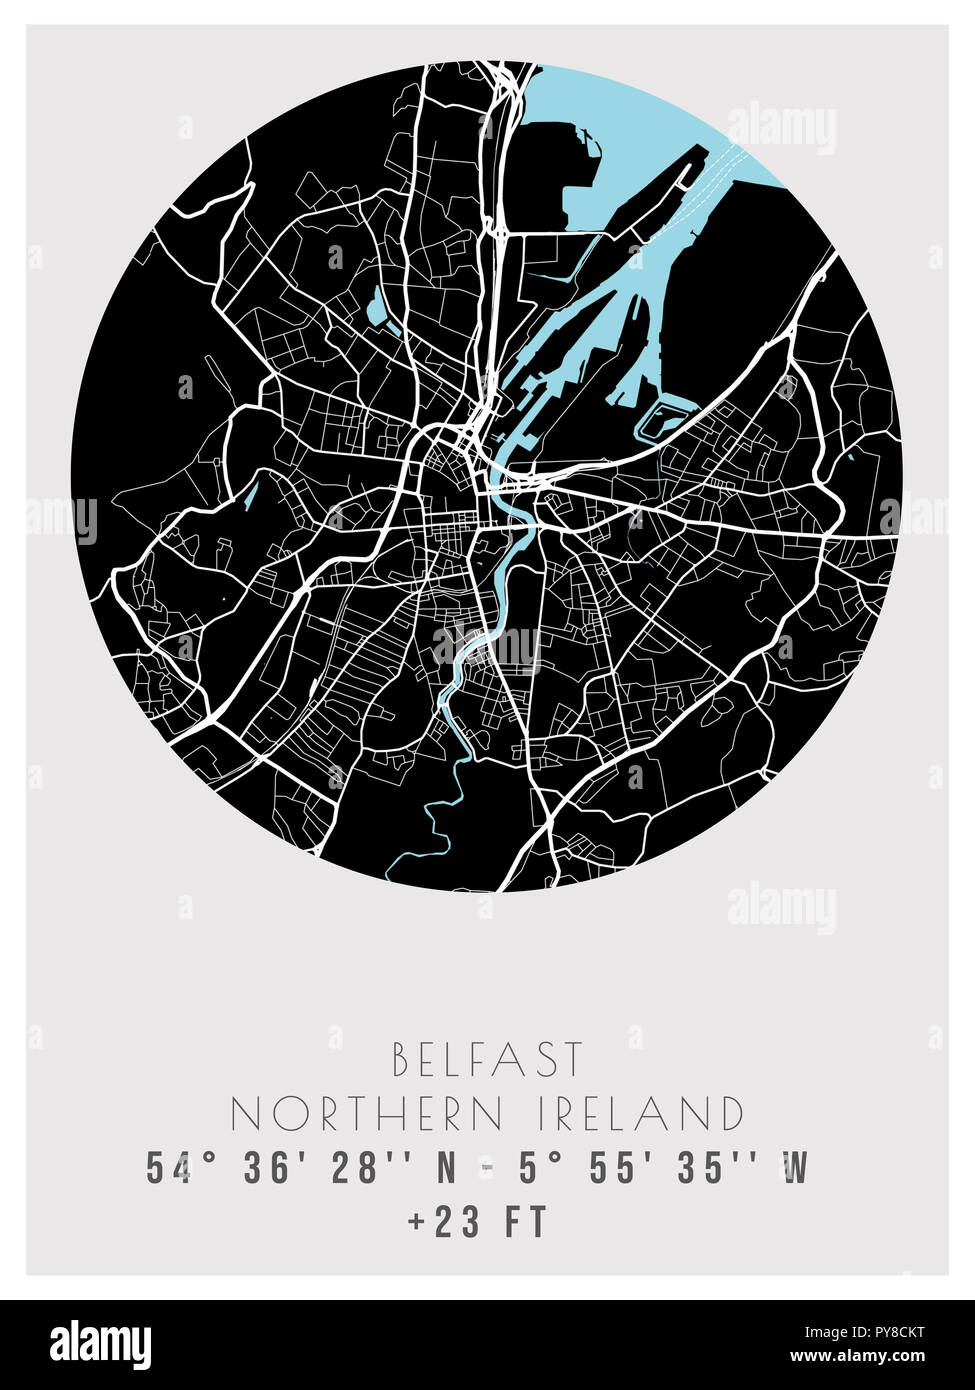 Belfast, Northern Ireland Minimalist Street Map Poster.jpg - PY8CKT Stock Photo